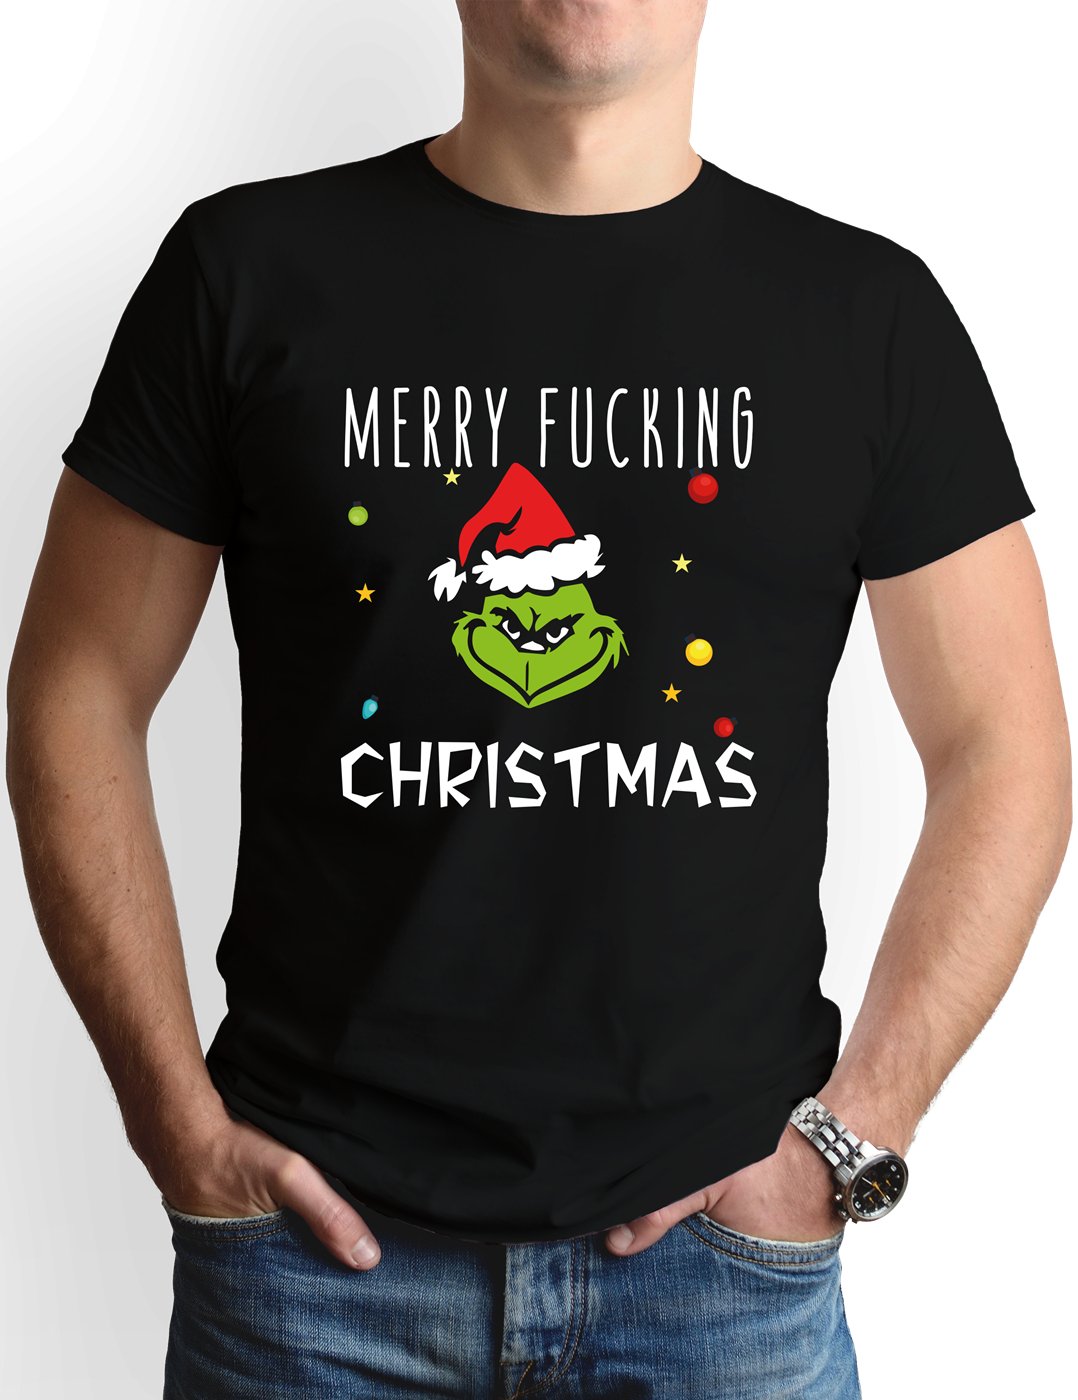 Bild: T-Shirt Herren - Grinch - Merry fucking Christmas (Gesicht) Geschenkidee